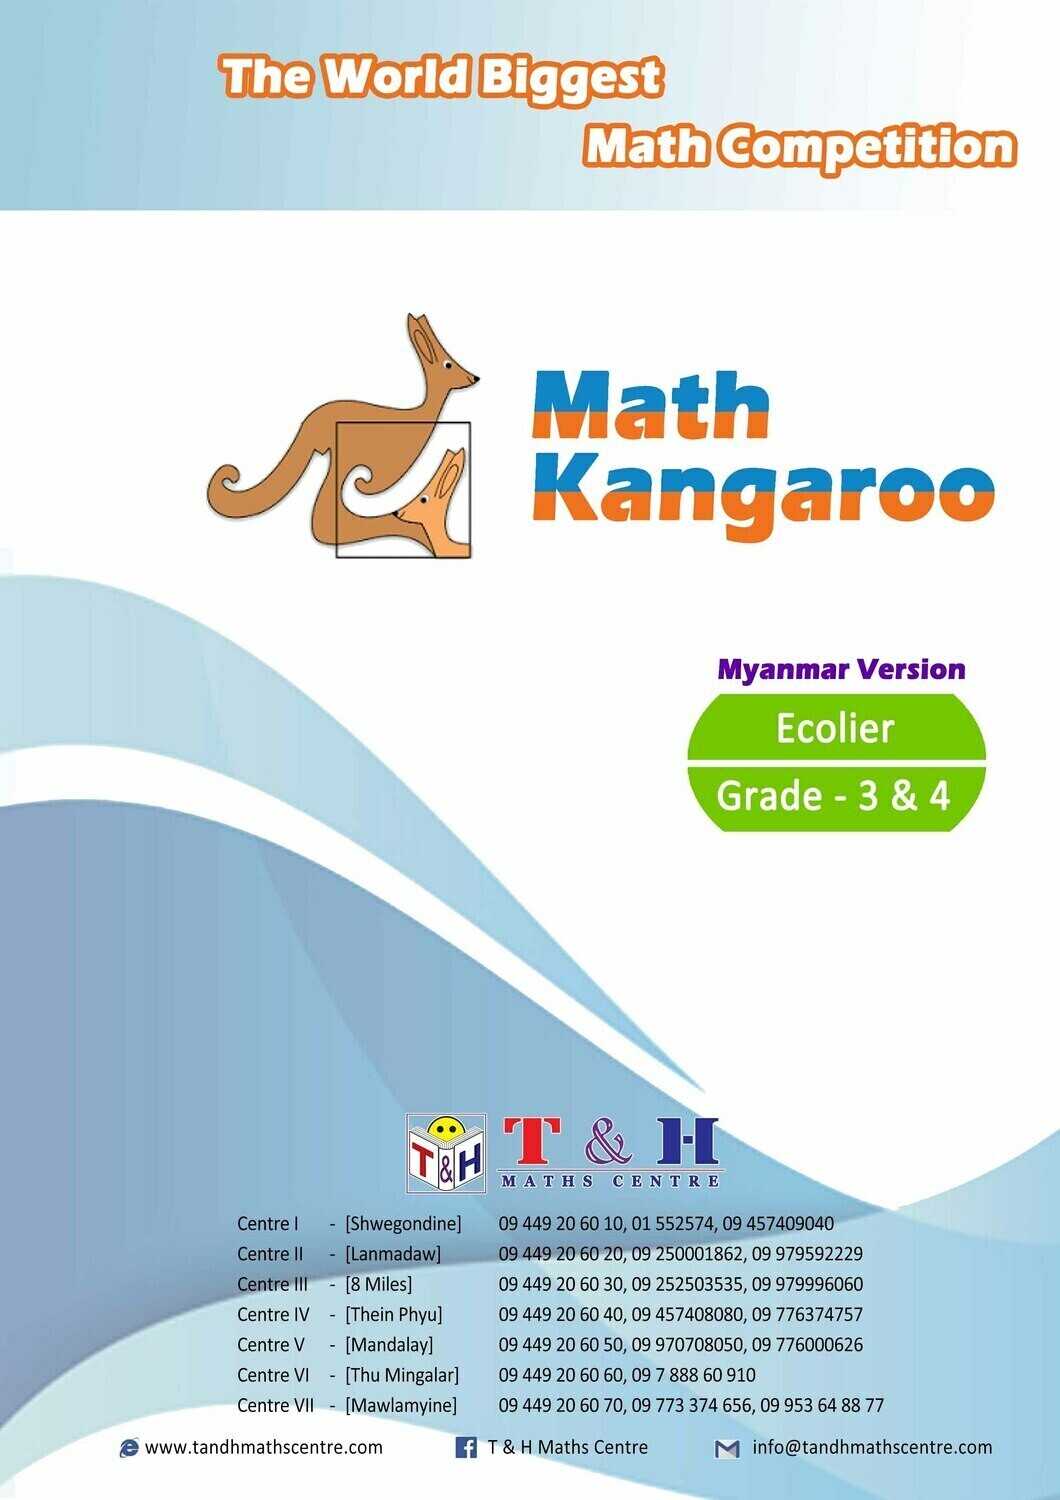 Kangaroo (Ecolier) Grade 3 & 4 (2013 to 2021)